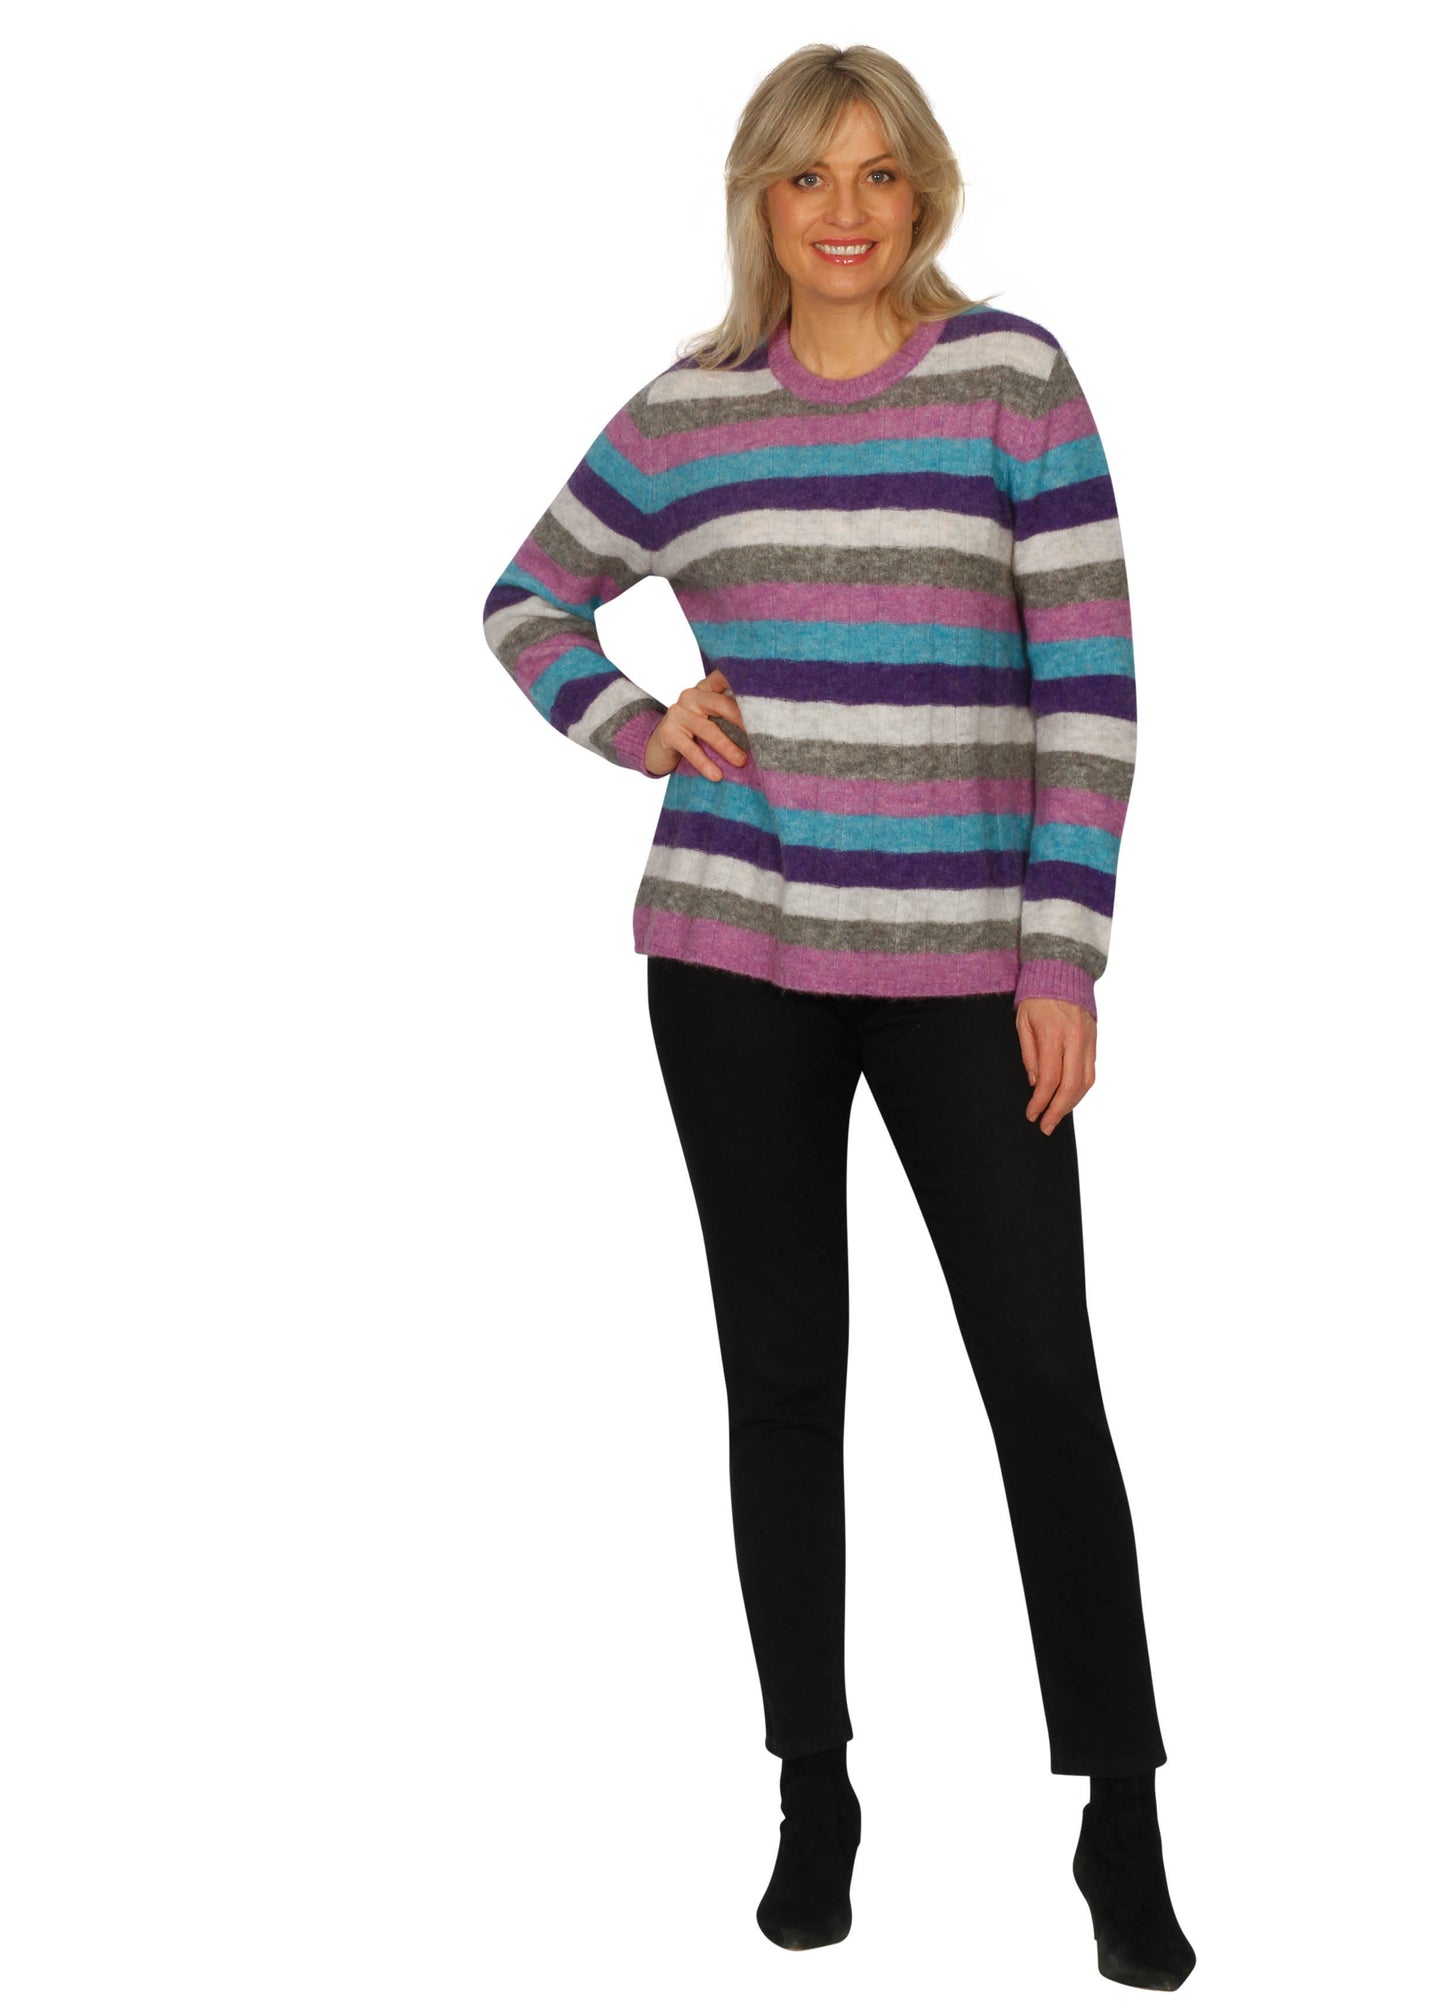 Cosy wave stripe knit